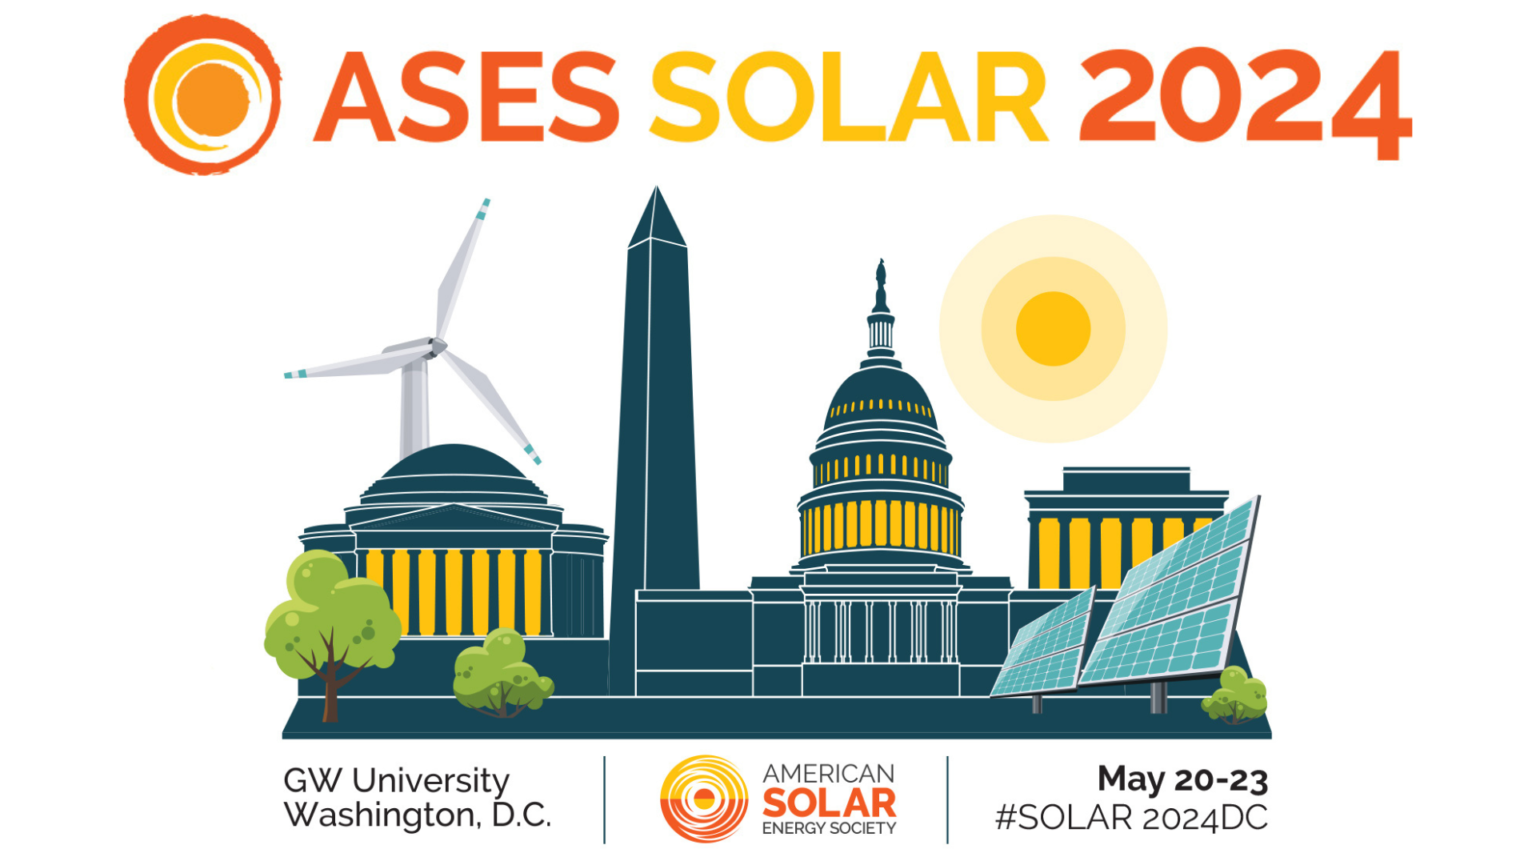 ASES SOLAR 2024 American Solar Energy Society